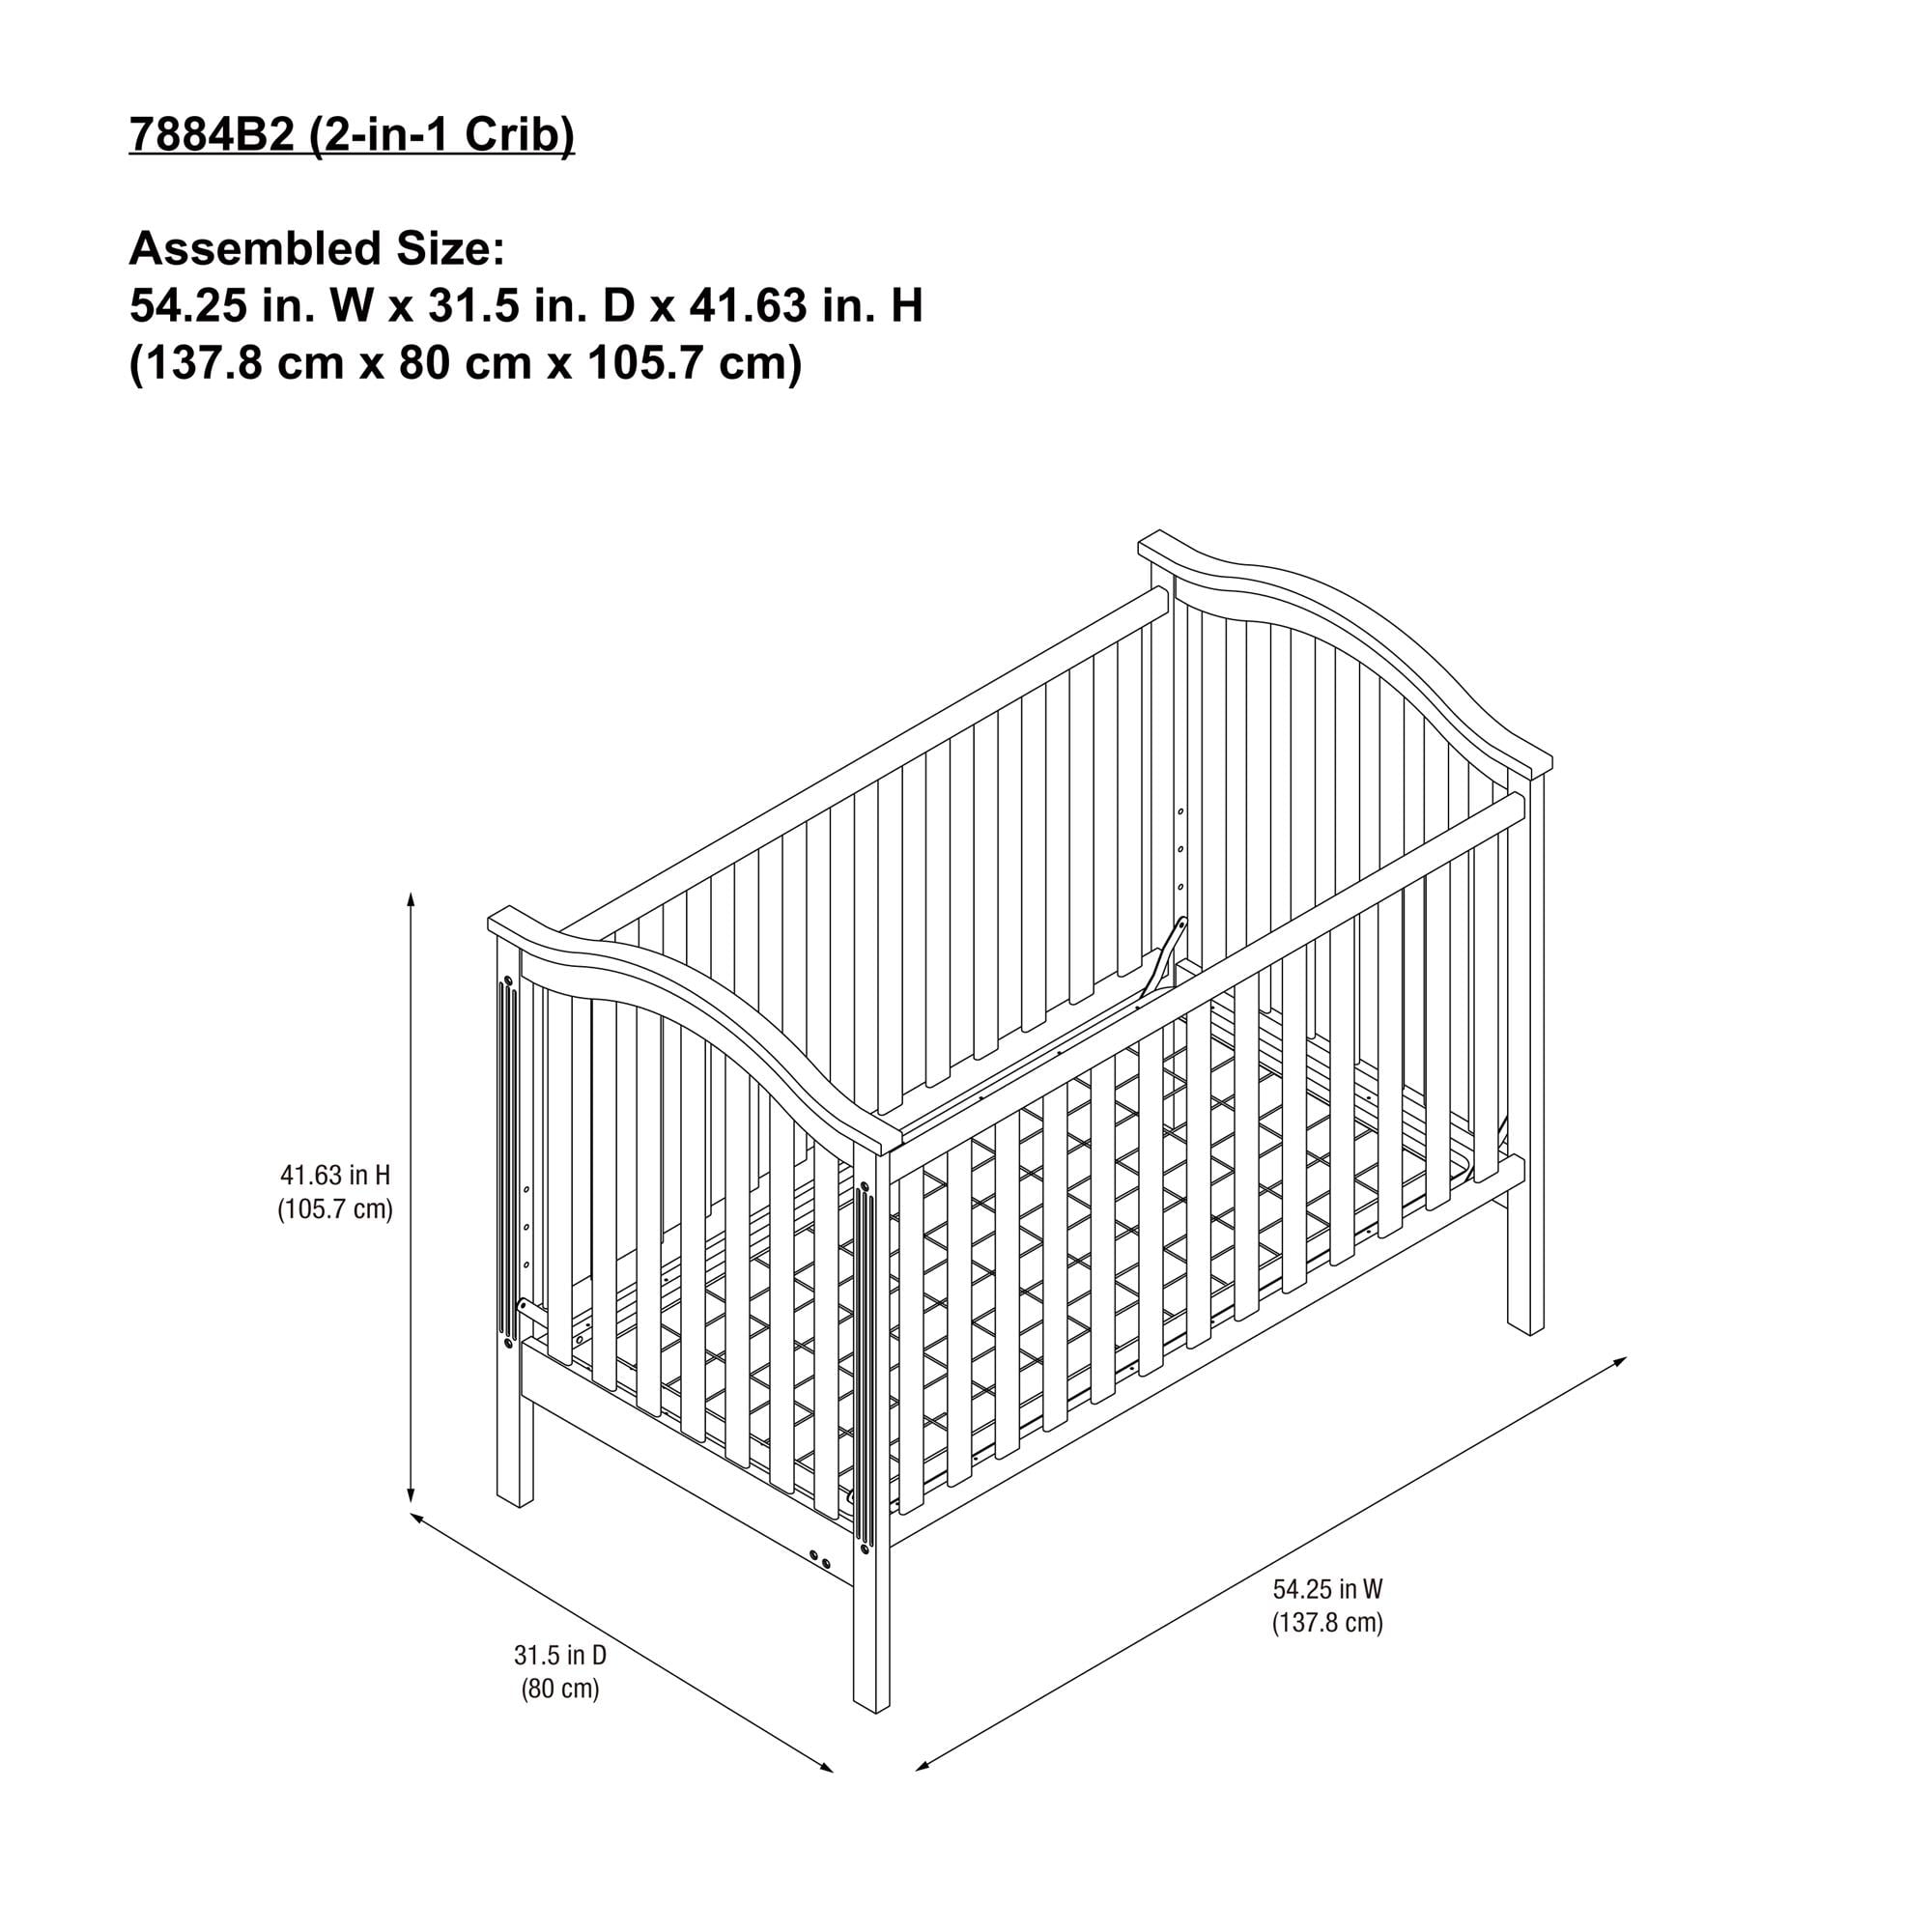 standard baby crib dimensions